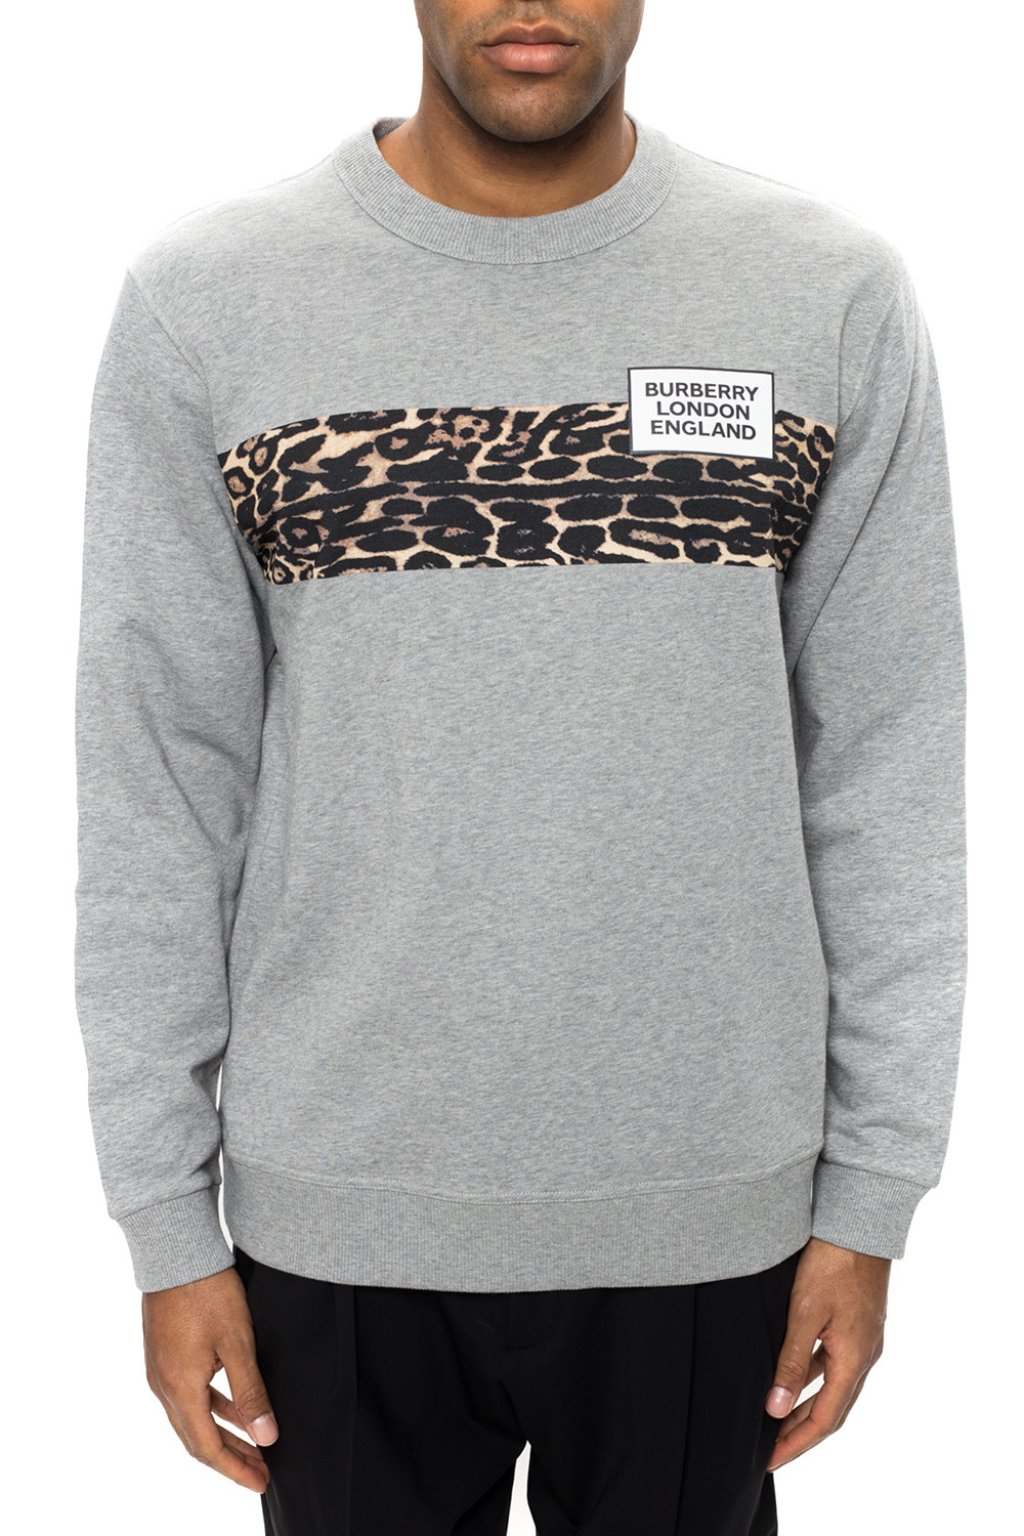 Burberry Sweatshirt with logo | Men's Clothing | Vitkac